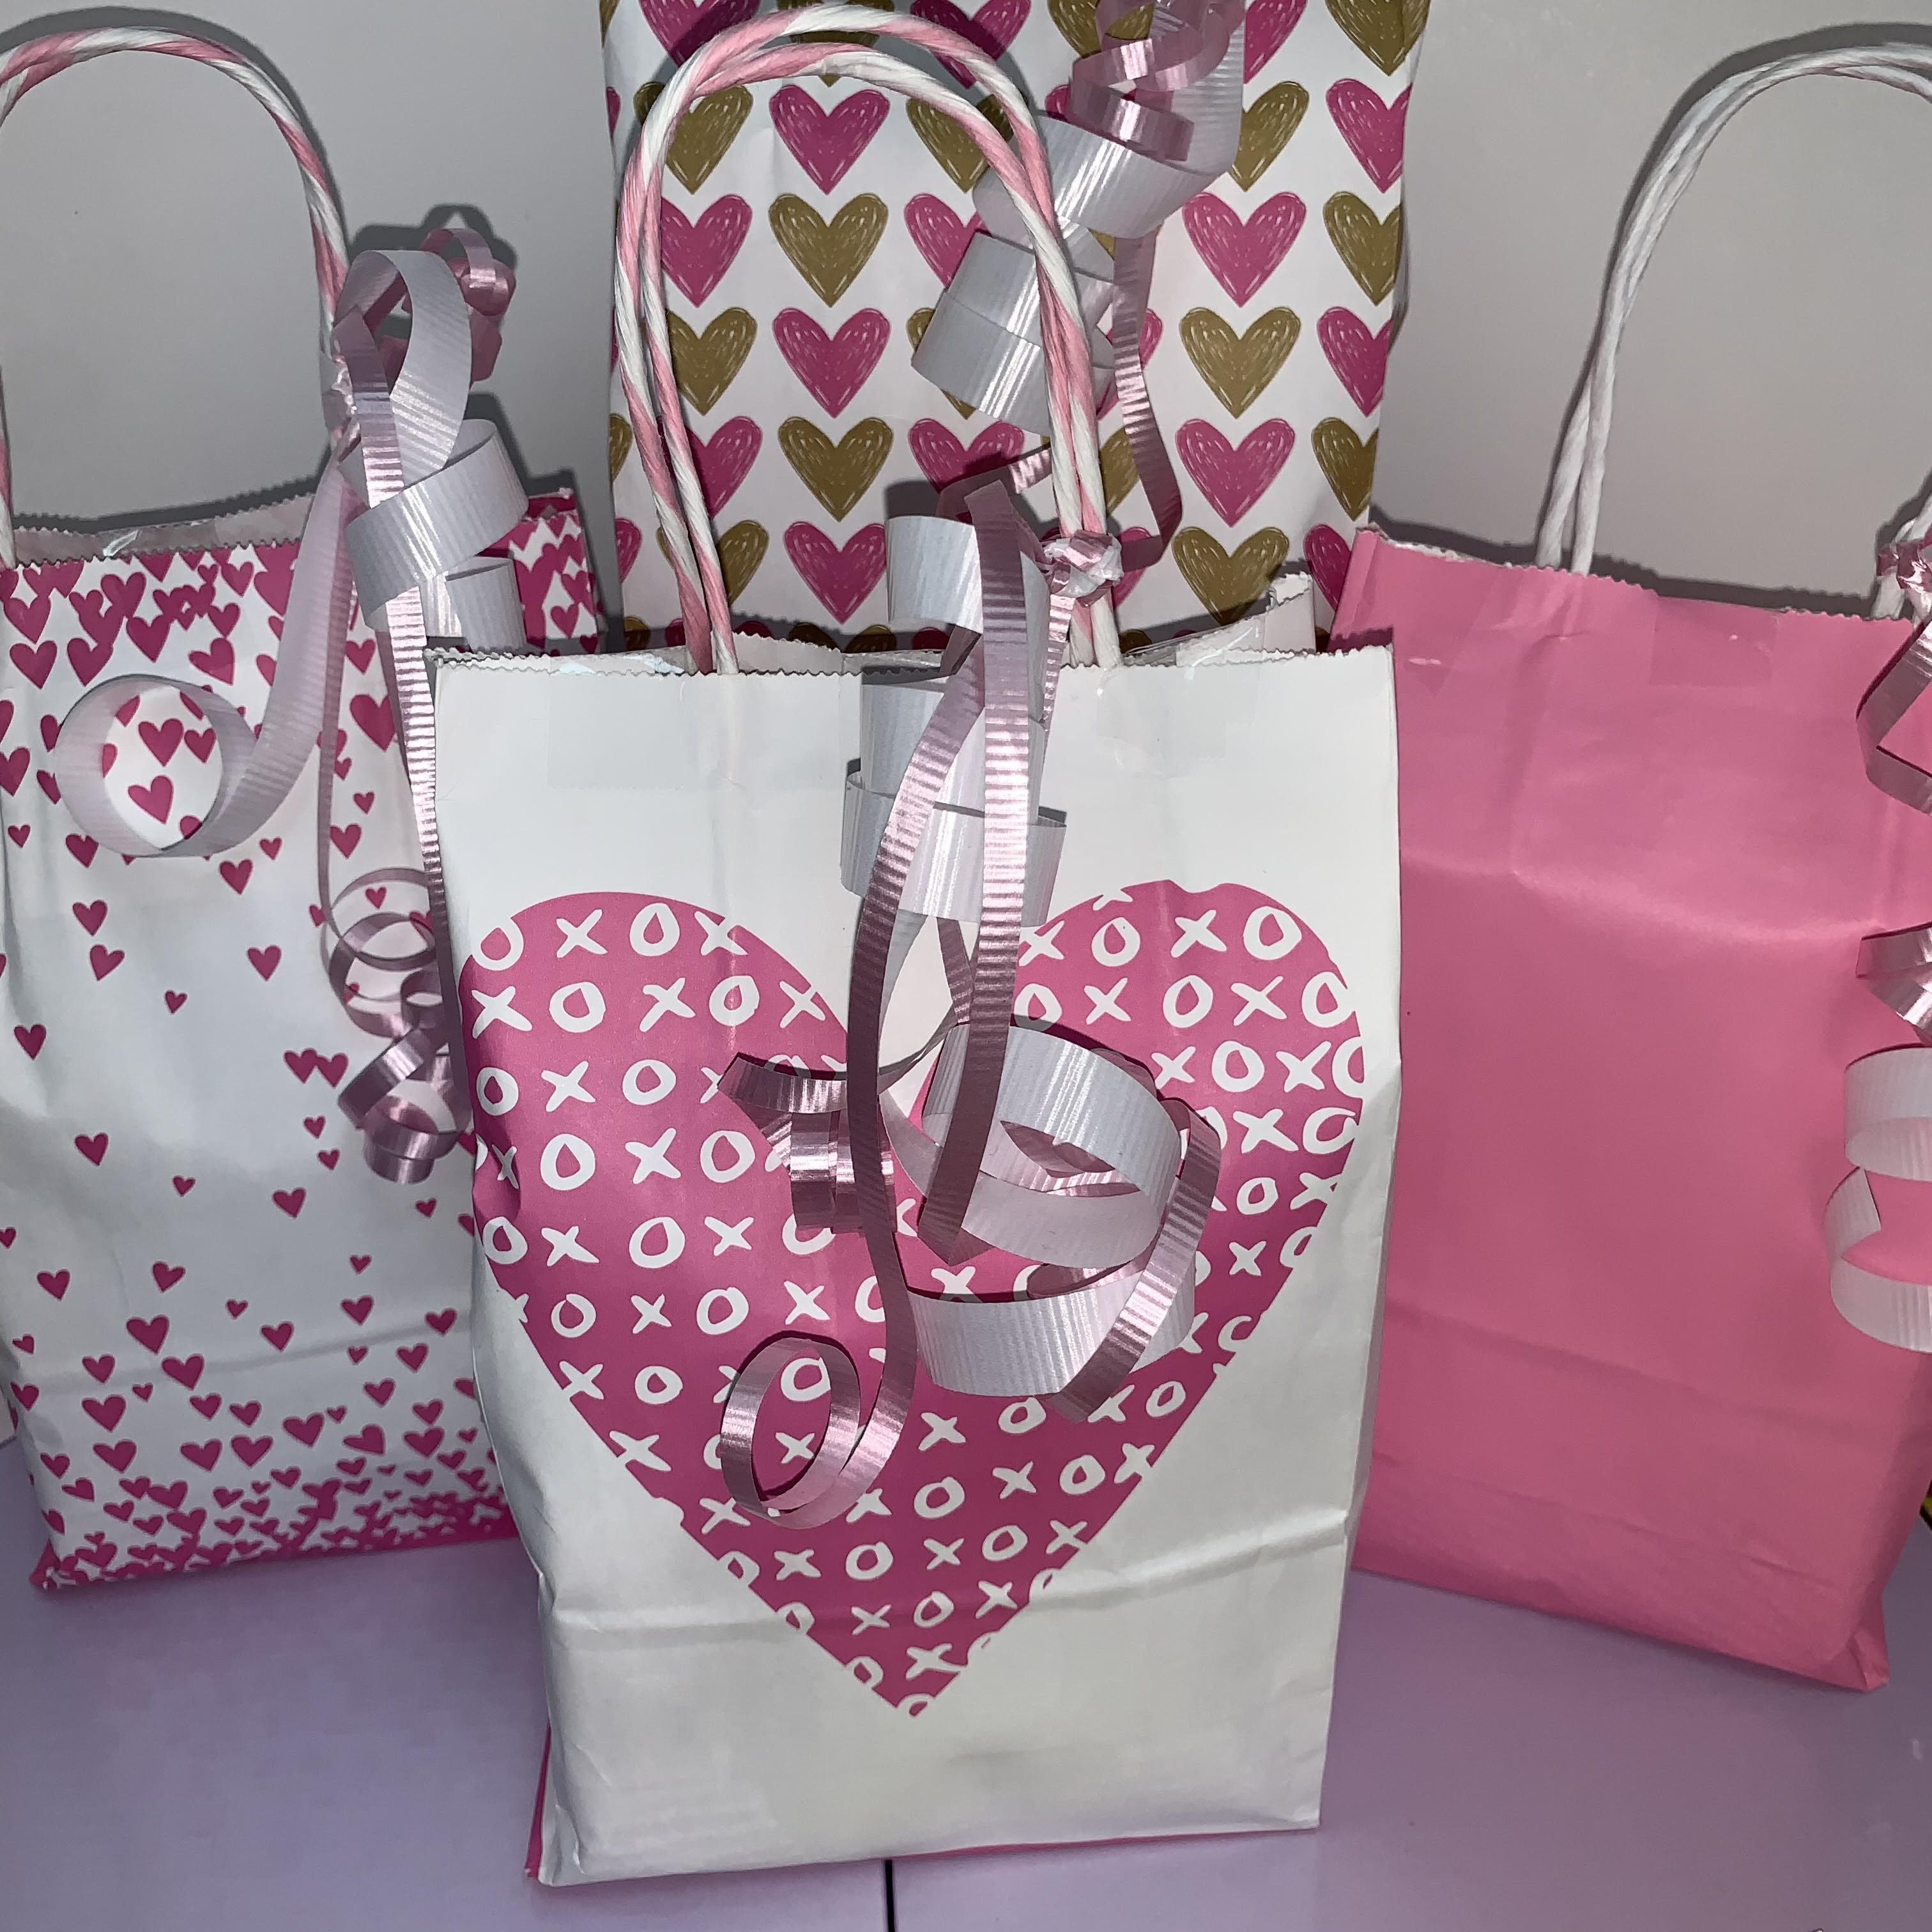 Sanrio Gift Bag - Value over $35